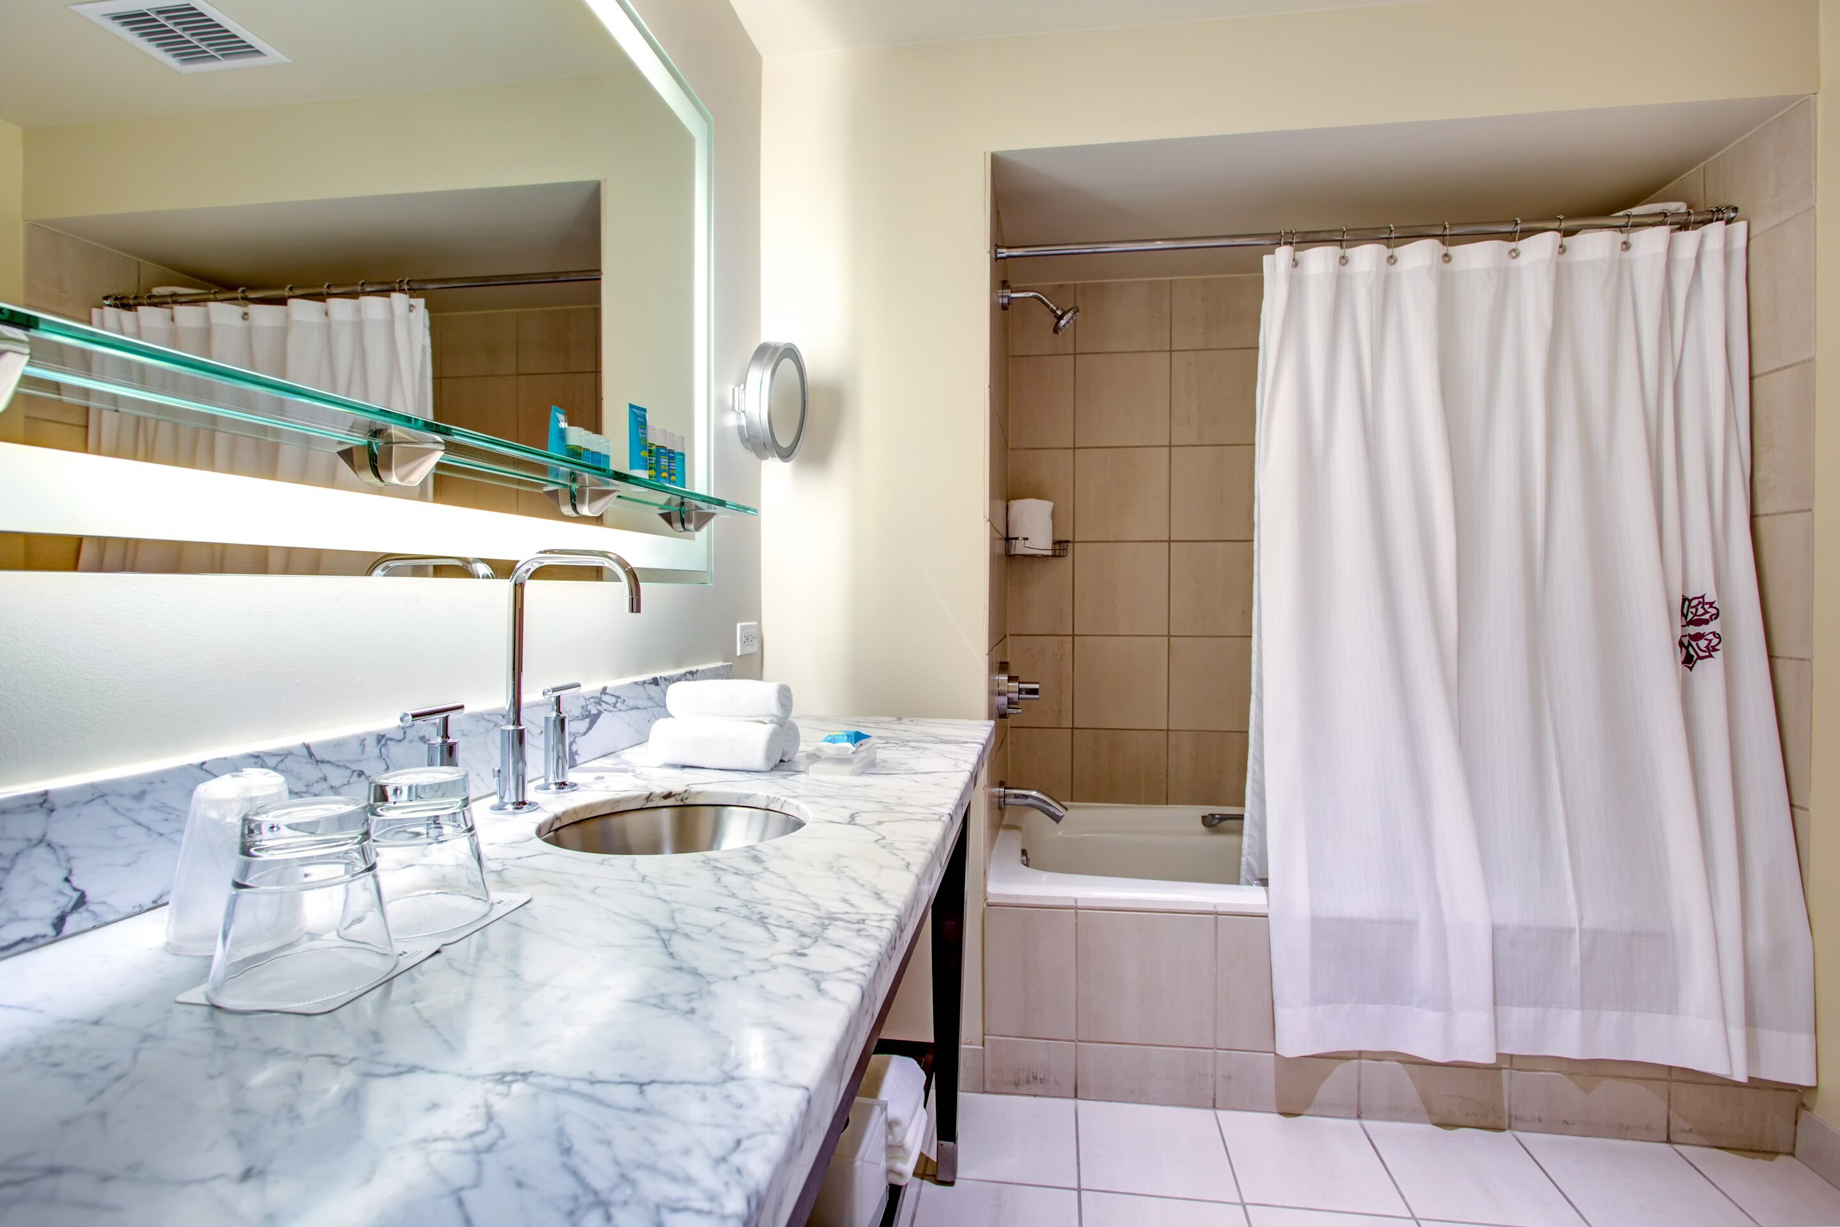 W Chicago City Center Hotel – Chicago, IL, USA – Fabulous Bathroom Vanity